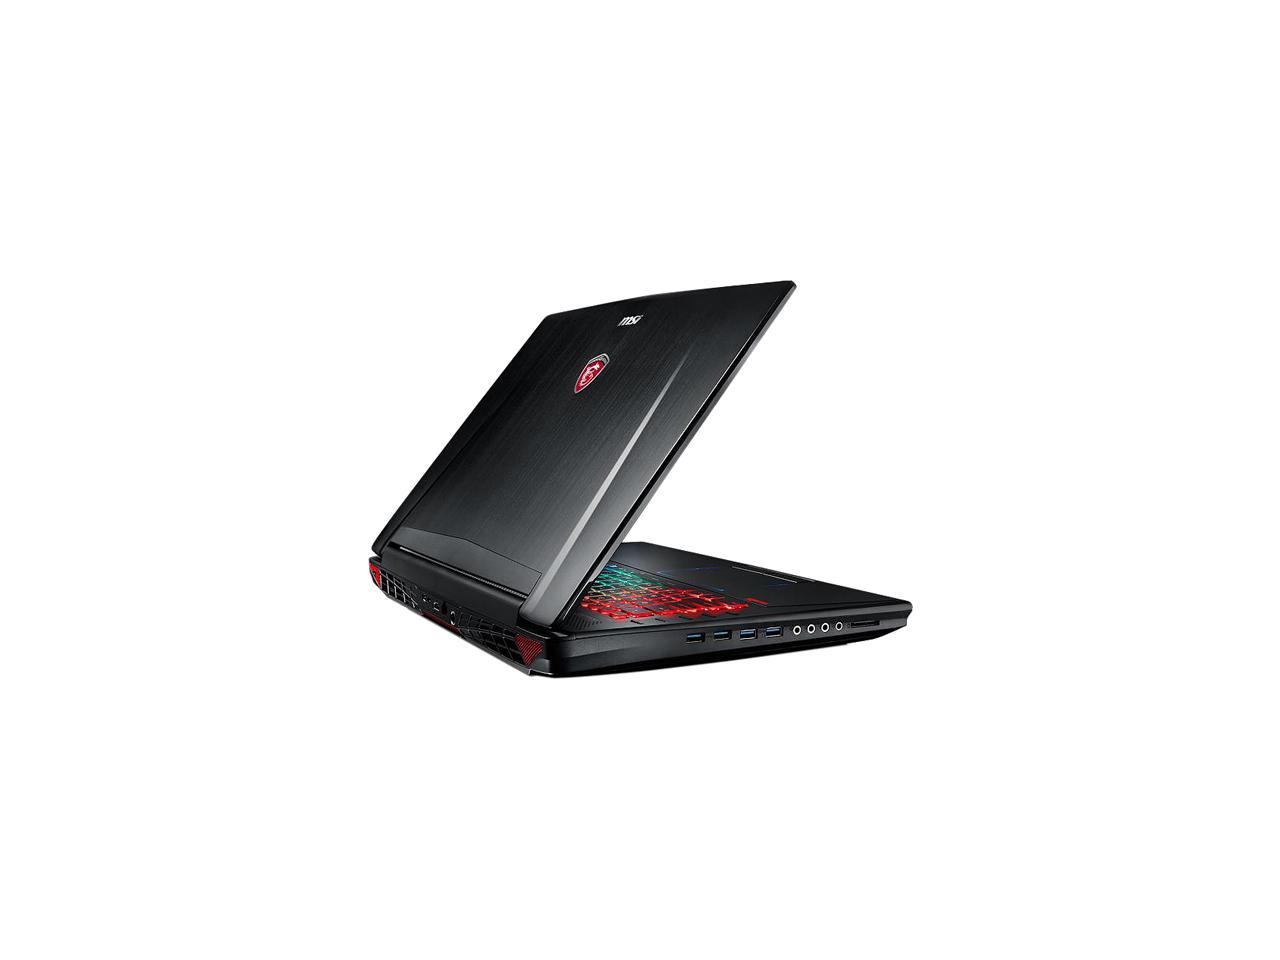 MSI GT Series GT72 Dominator Pro G-034 Gaming Laptop 6th Generation